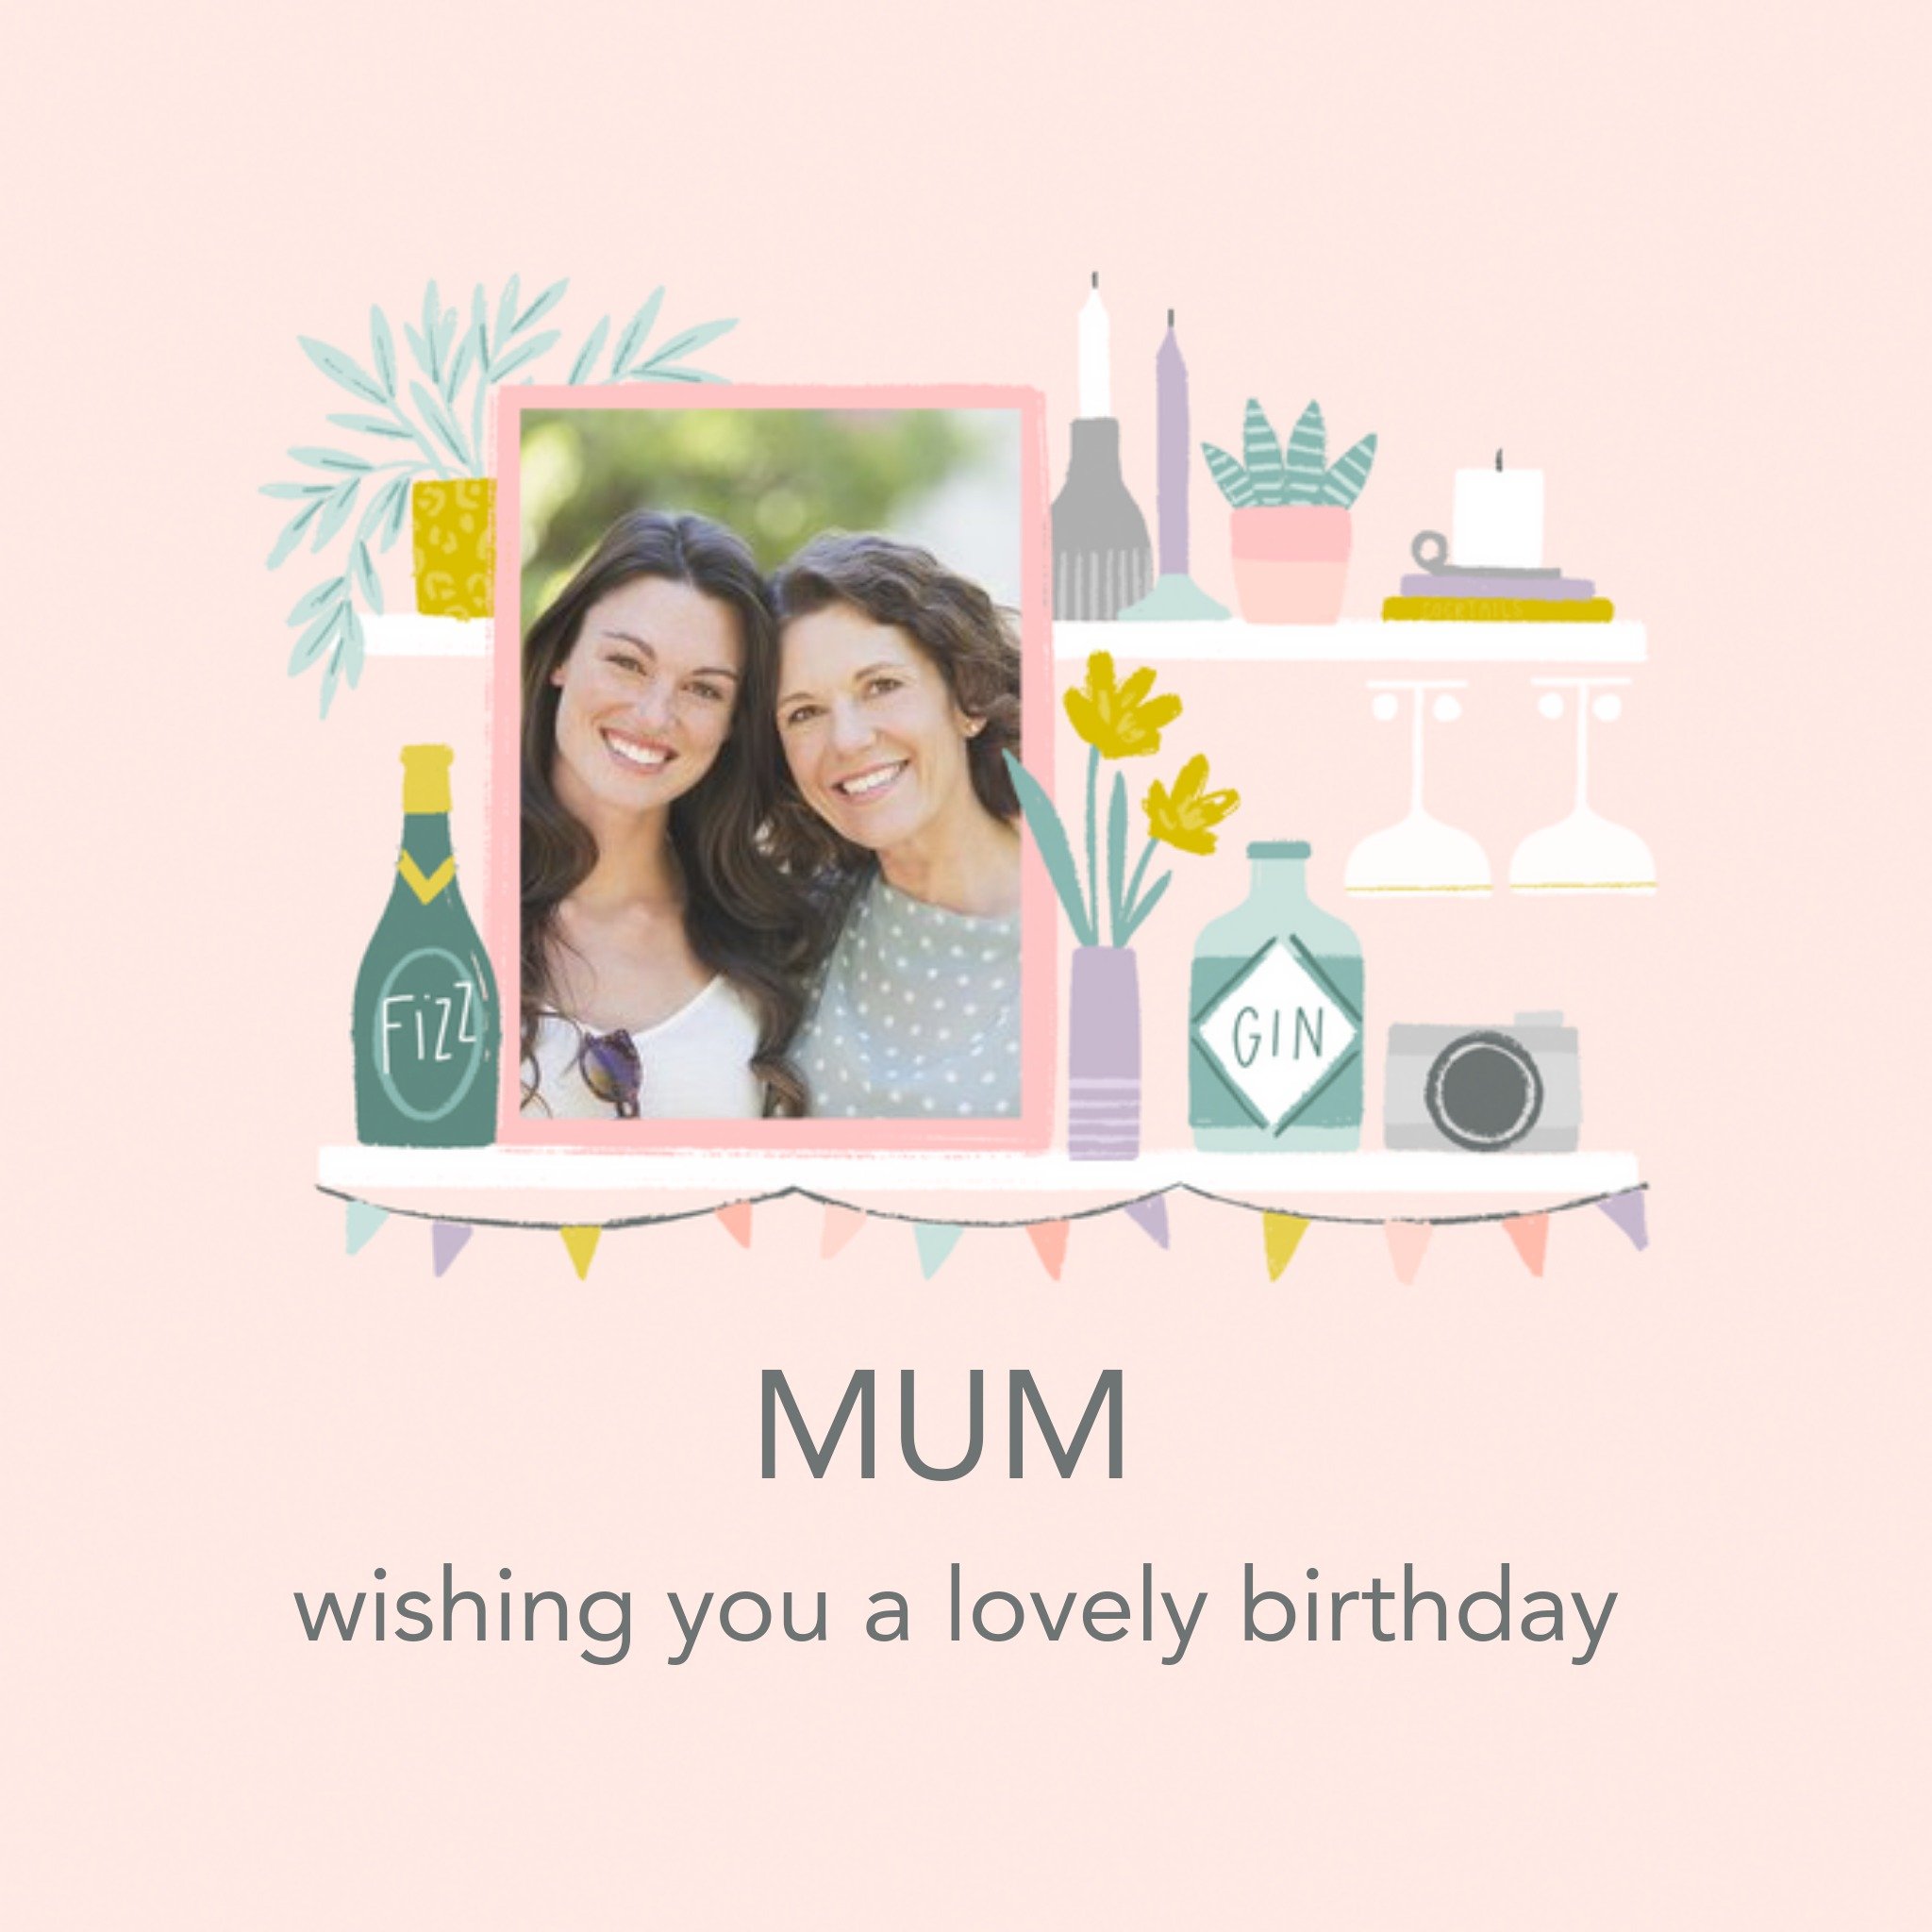 Moonpig Illustrated Shelves Champagne Gin Flowers Mum Photo Upload Birthday Card, Large